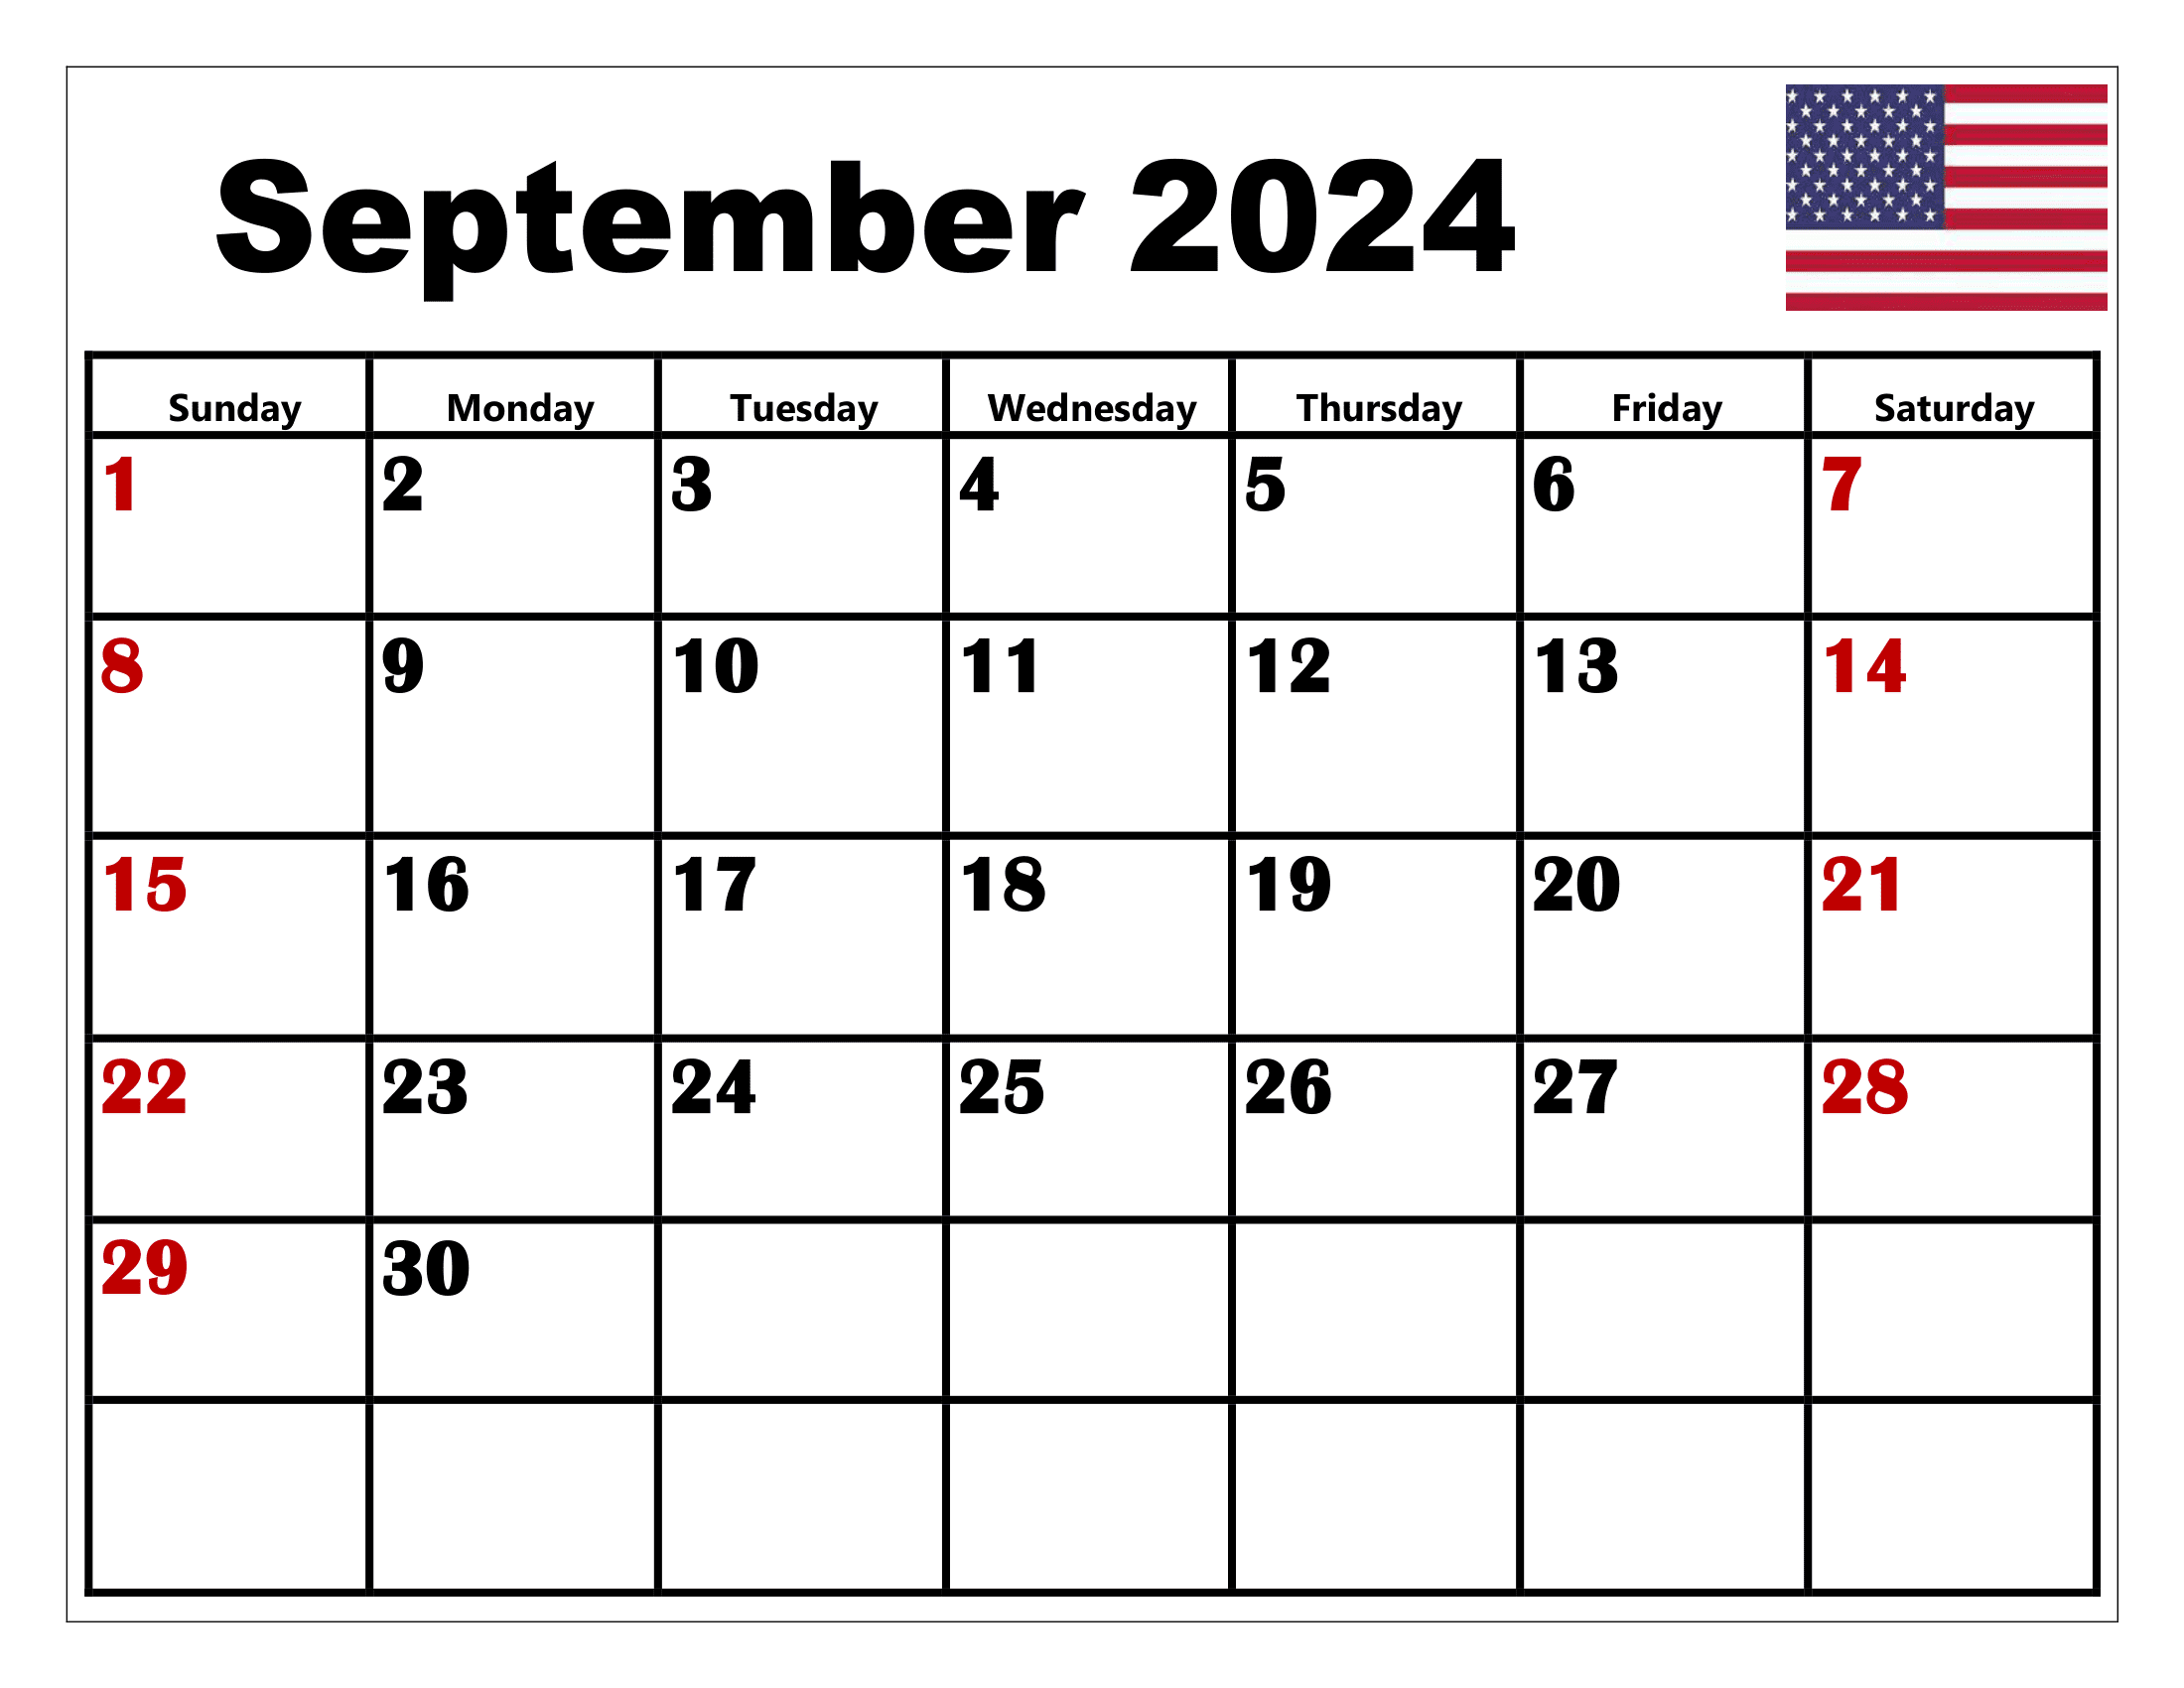 September 2024 Calendar Printable Pdf With Holidays for Sept 2024 Calendar Printable